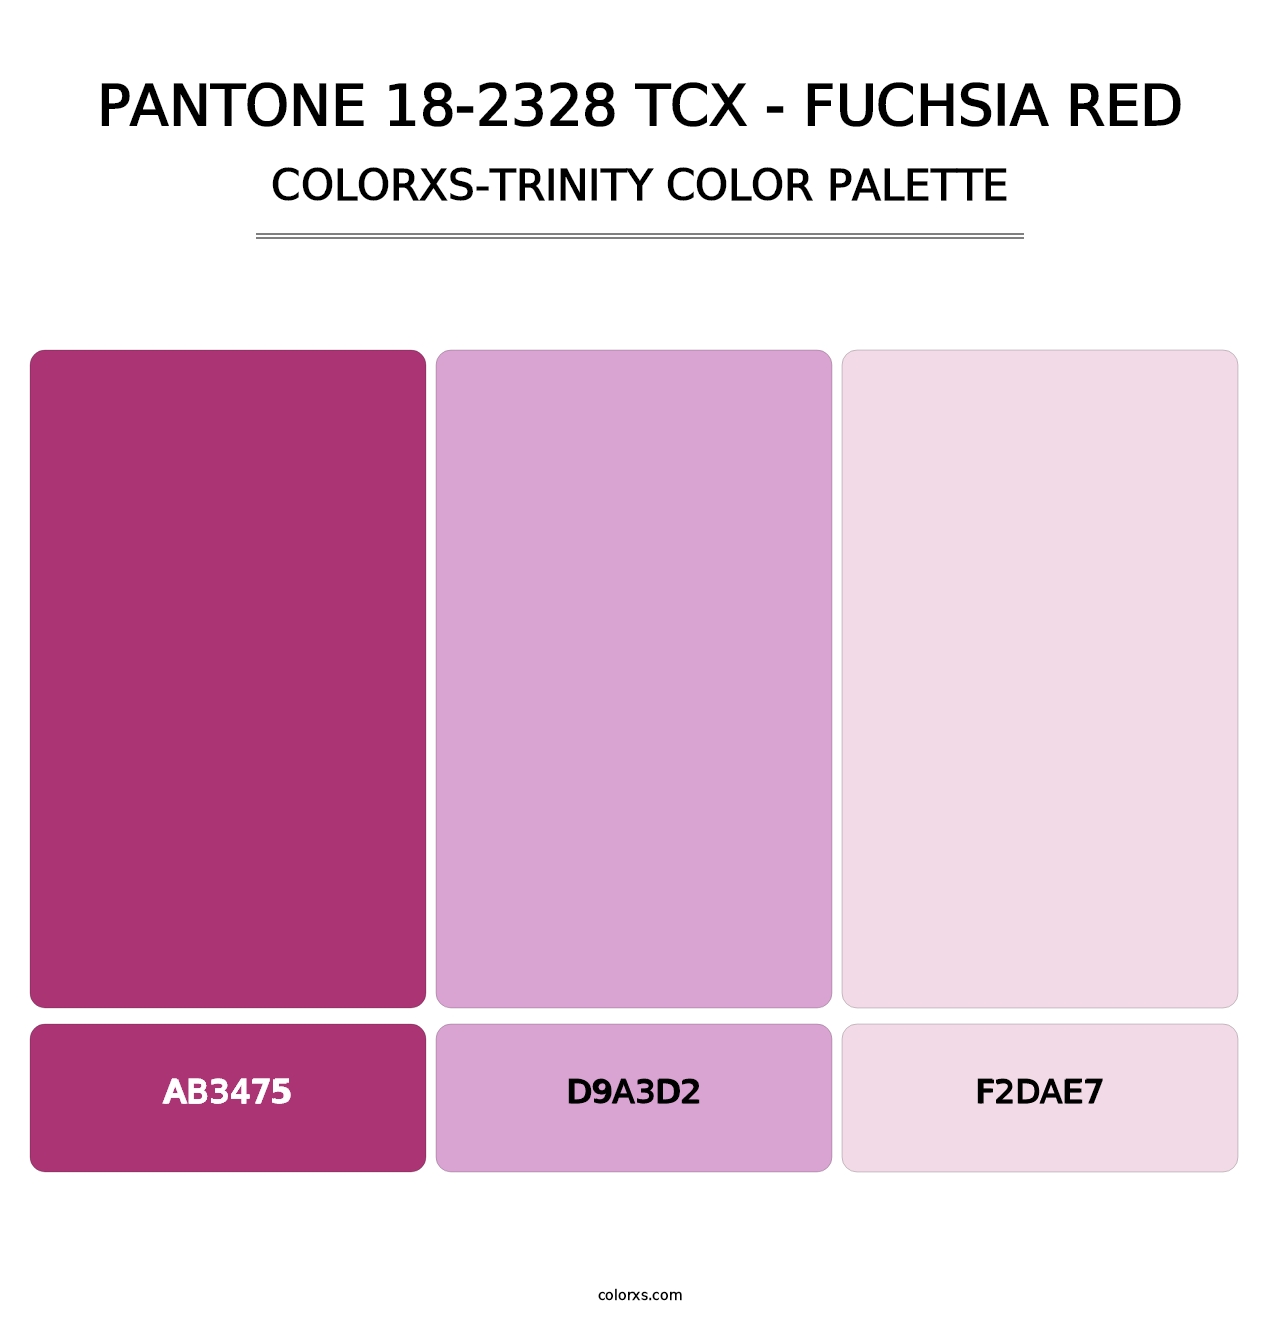 PANTONE 18-2328 TCX - Fuchsia Red - Colorxs Trinity Palette